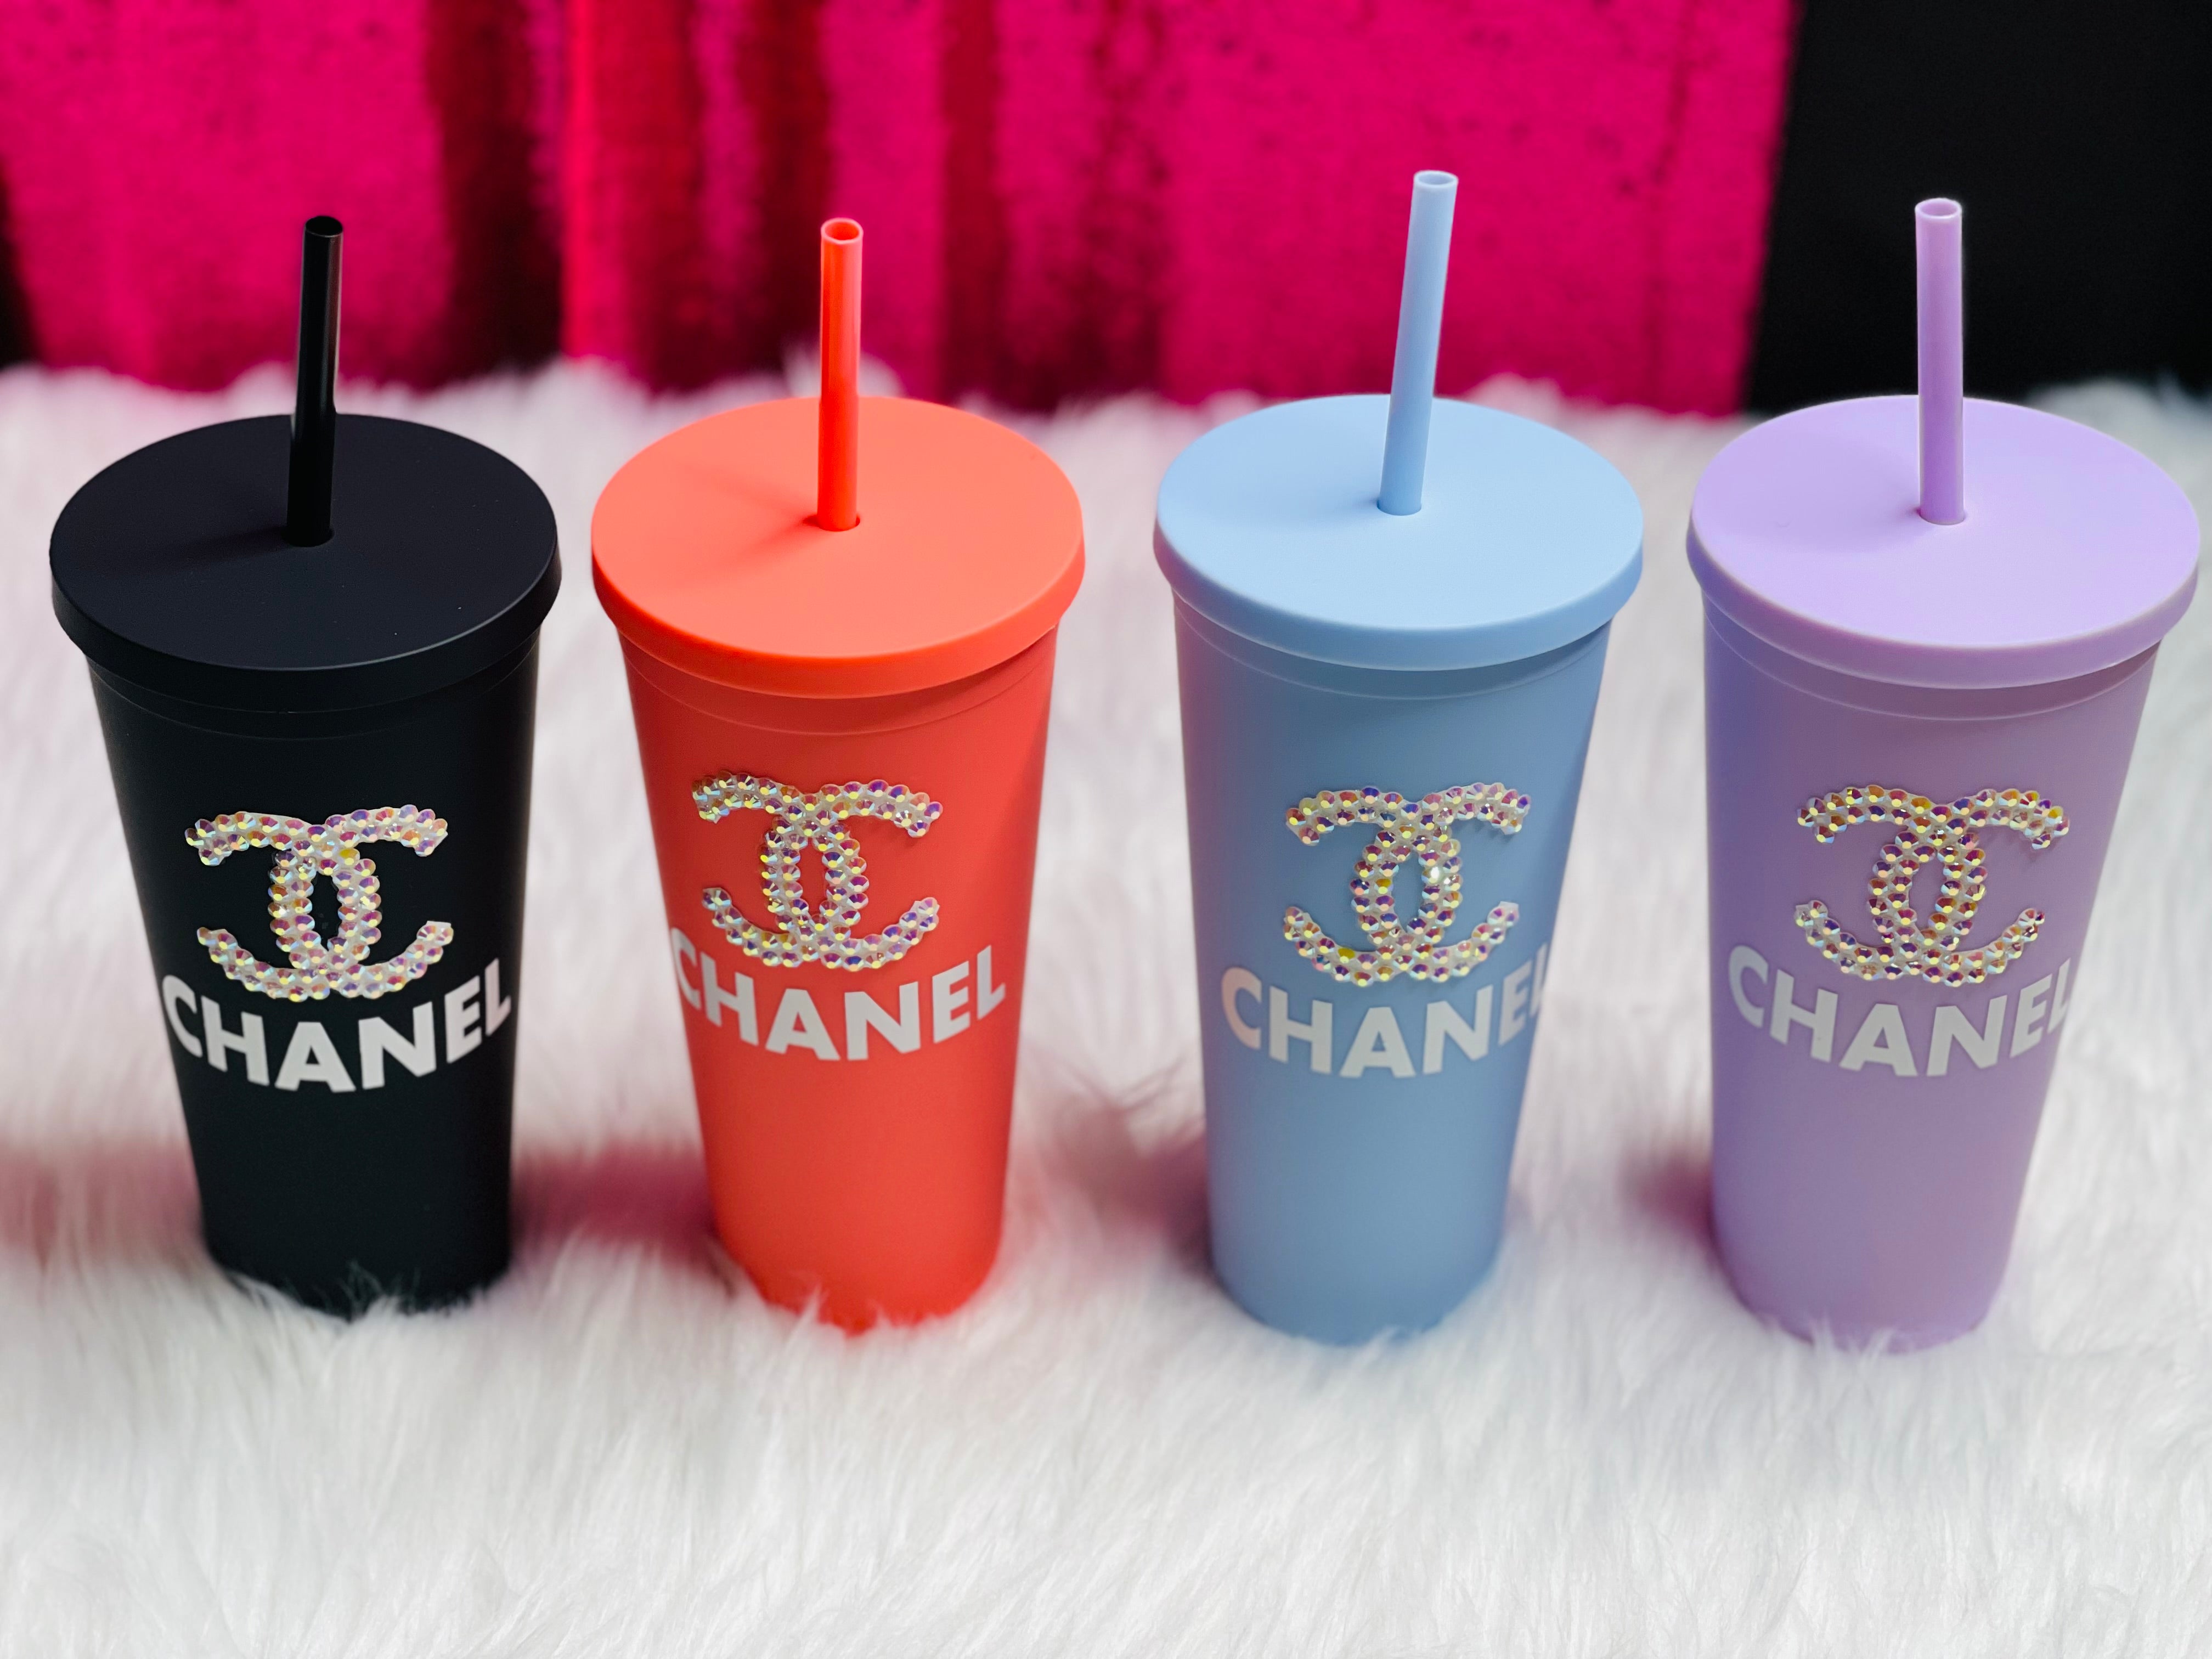 Chanel Starbucks Cup 